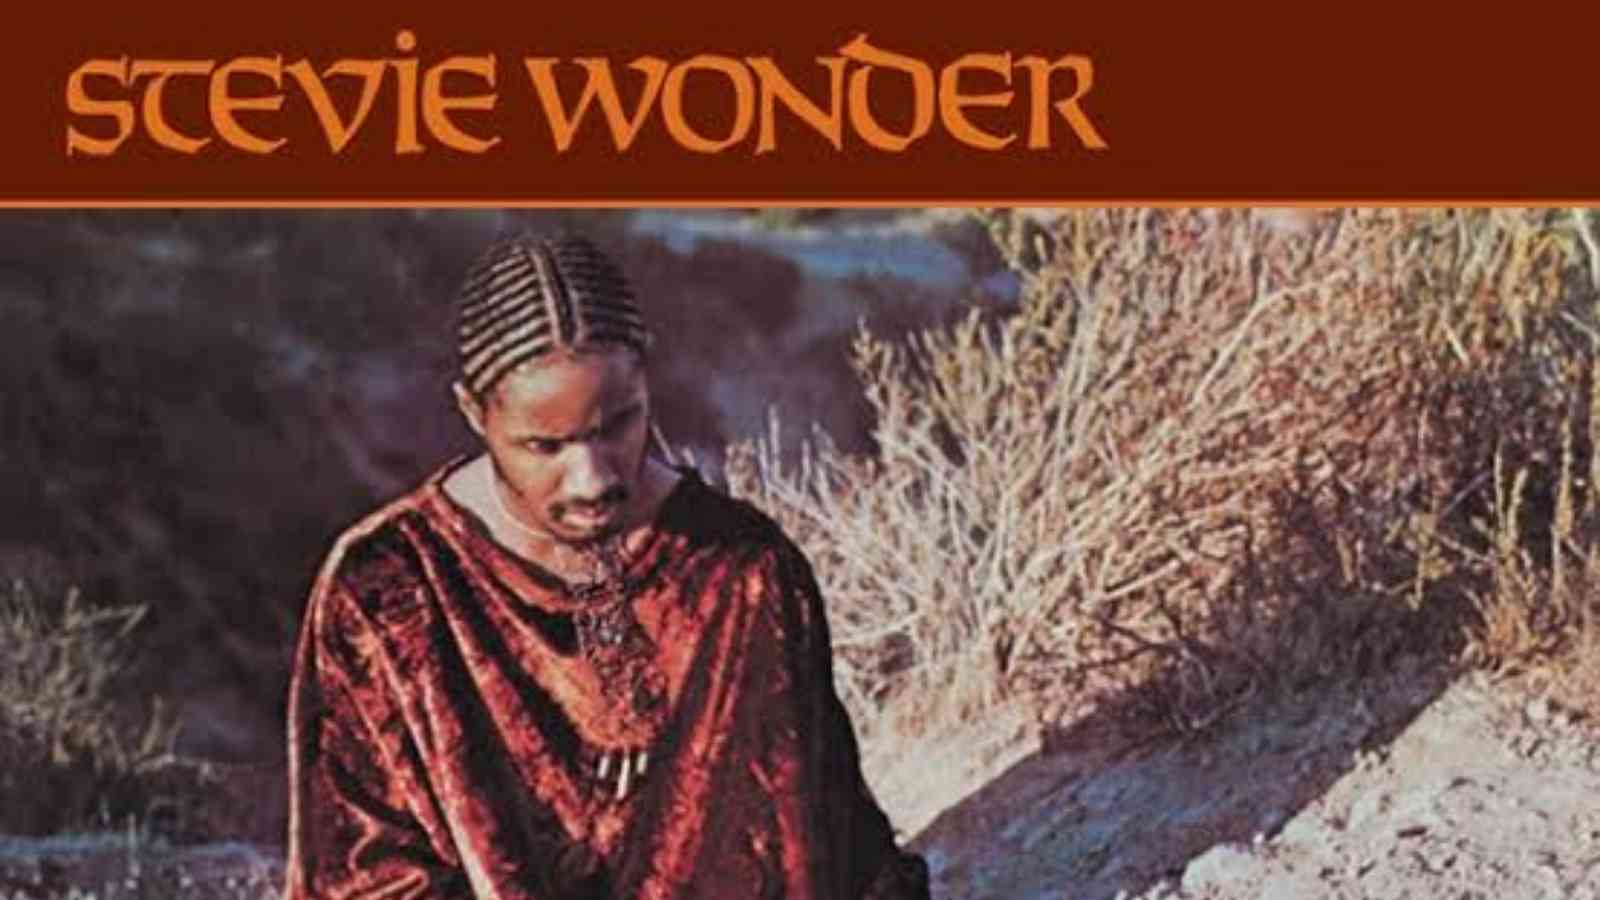 Stevie Wonder's Talking Book